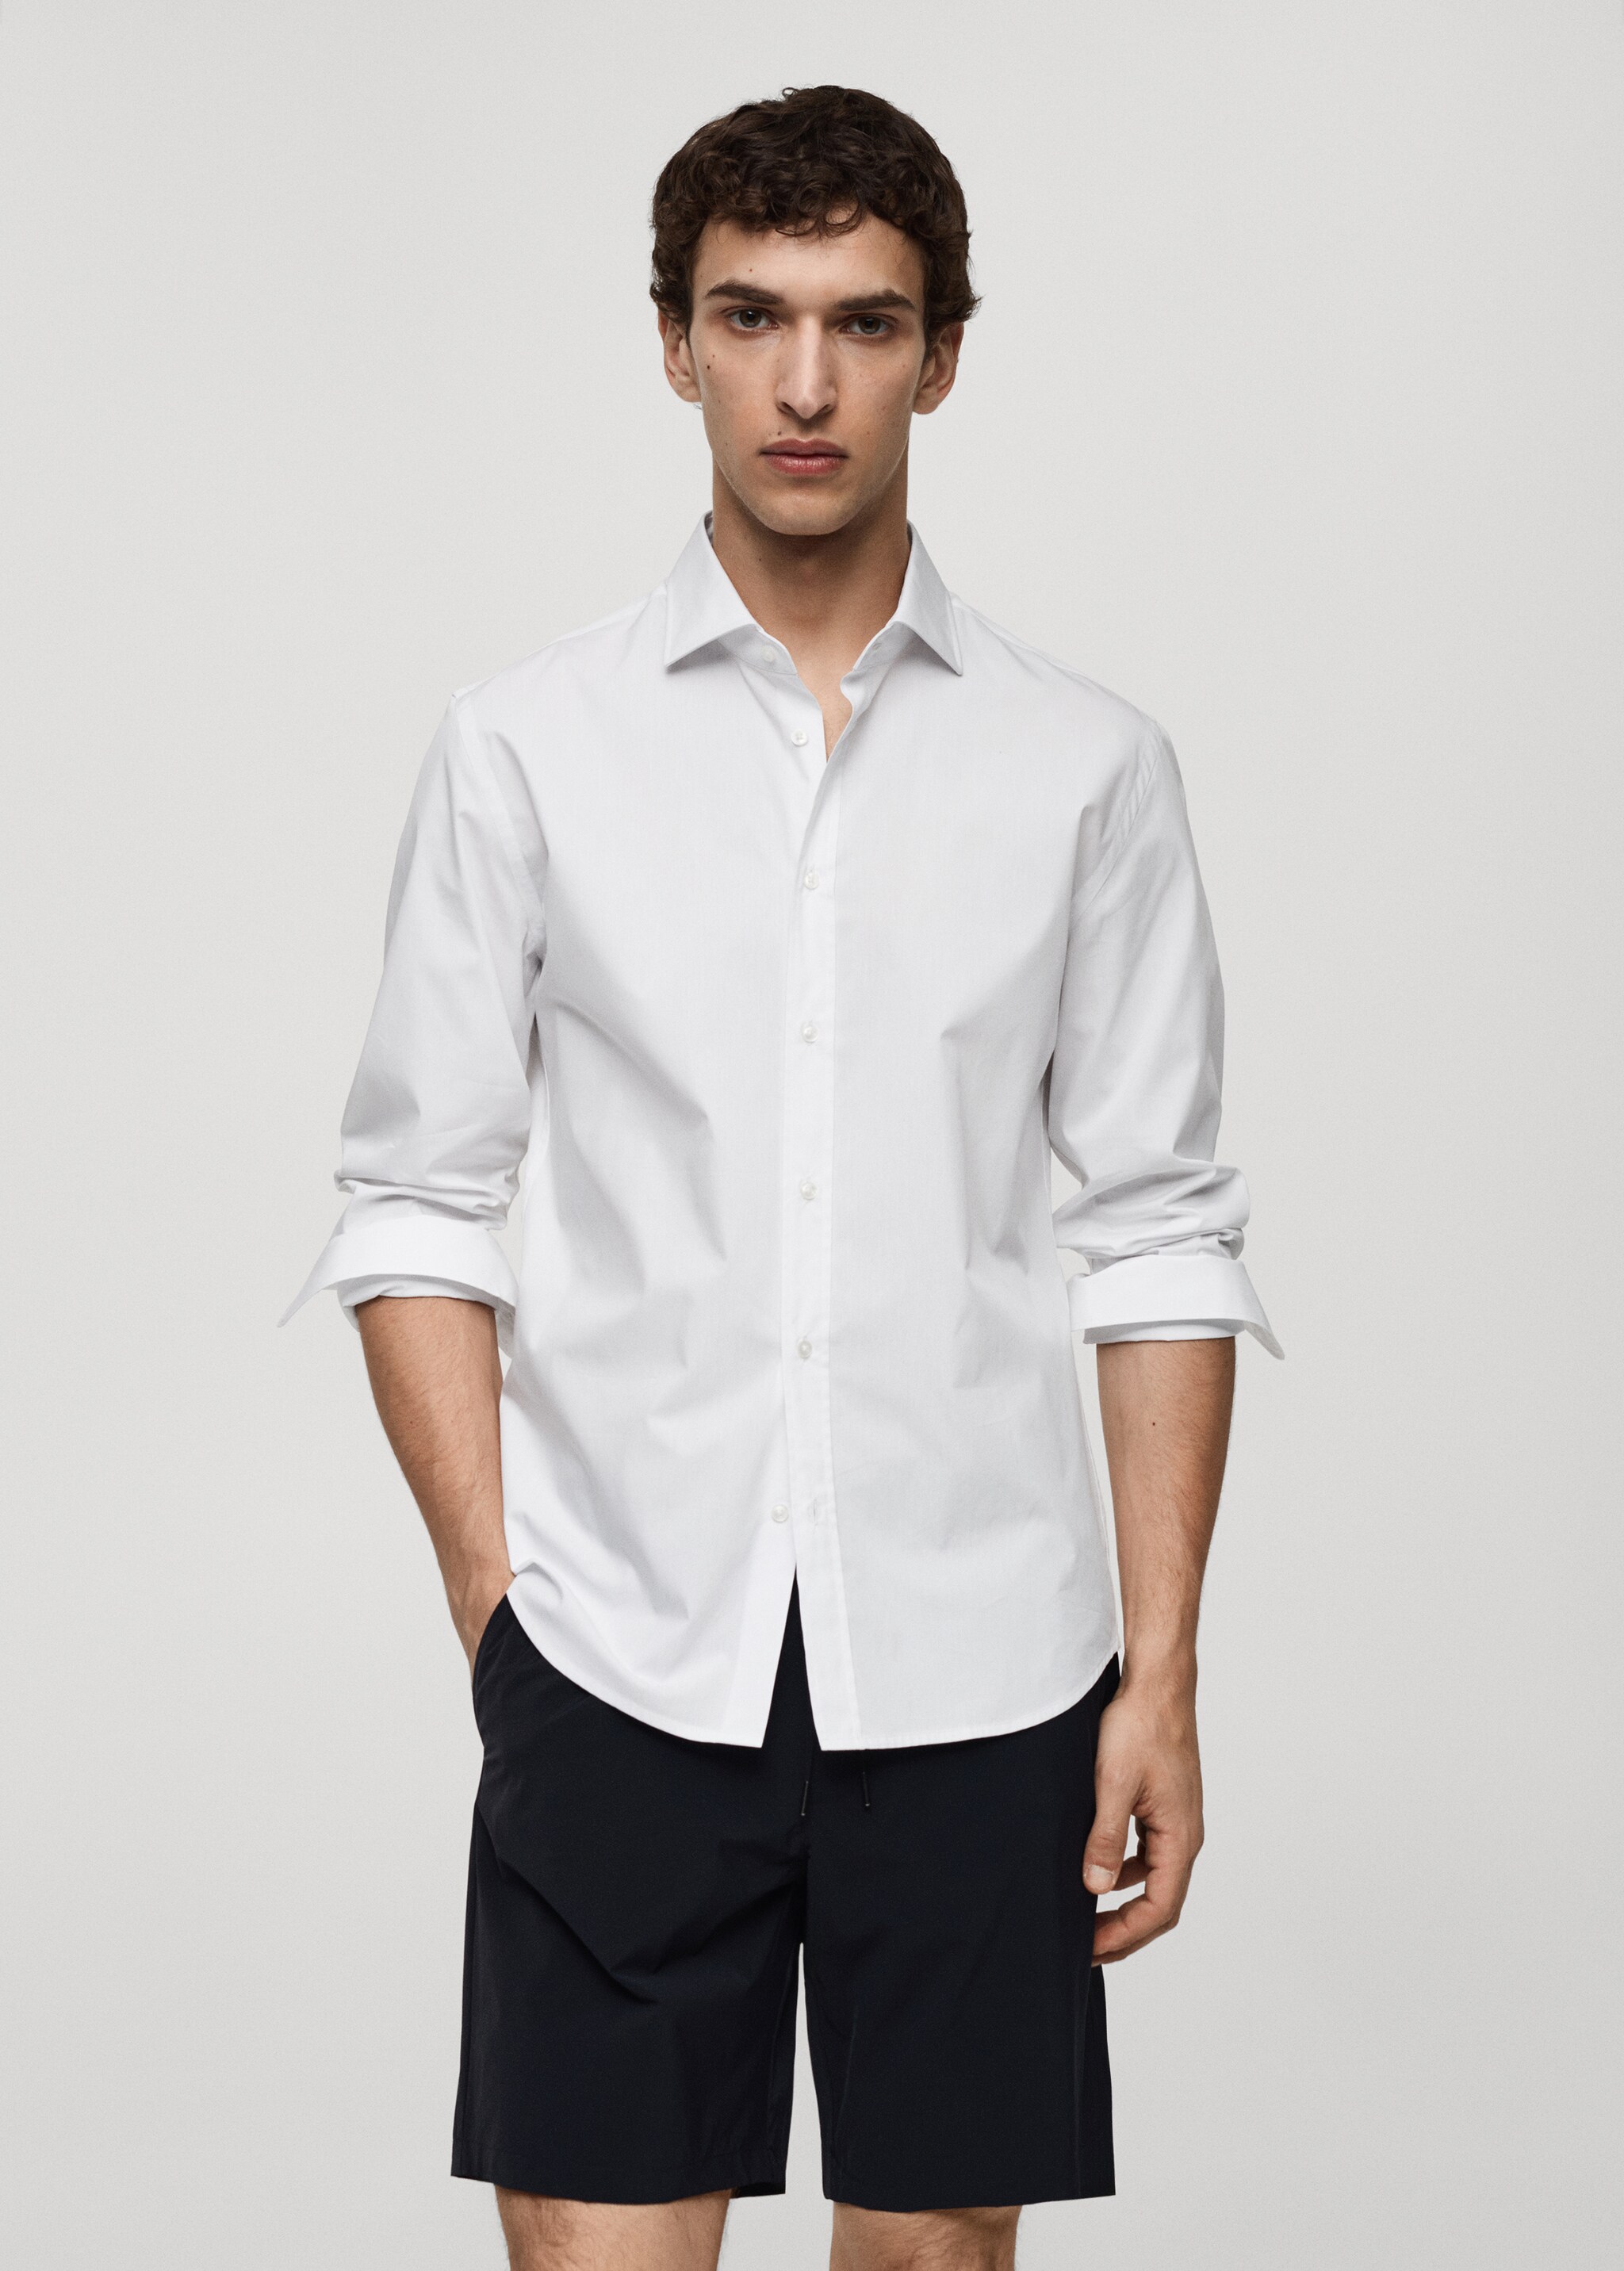 Coolmax® cotton shirt - Medium plane